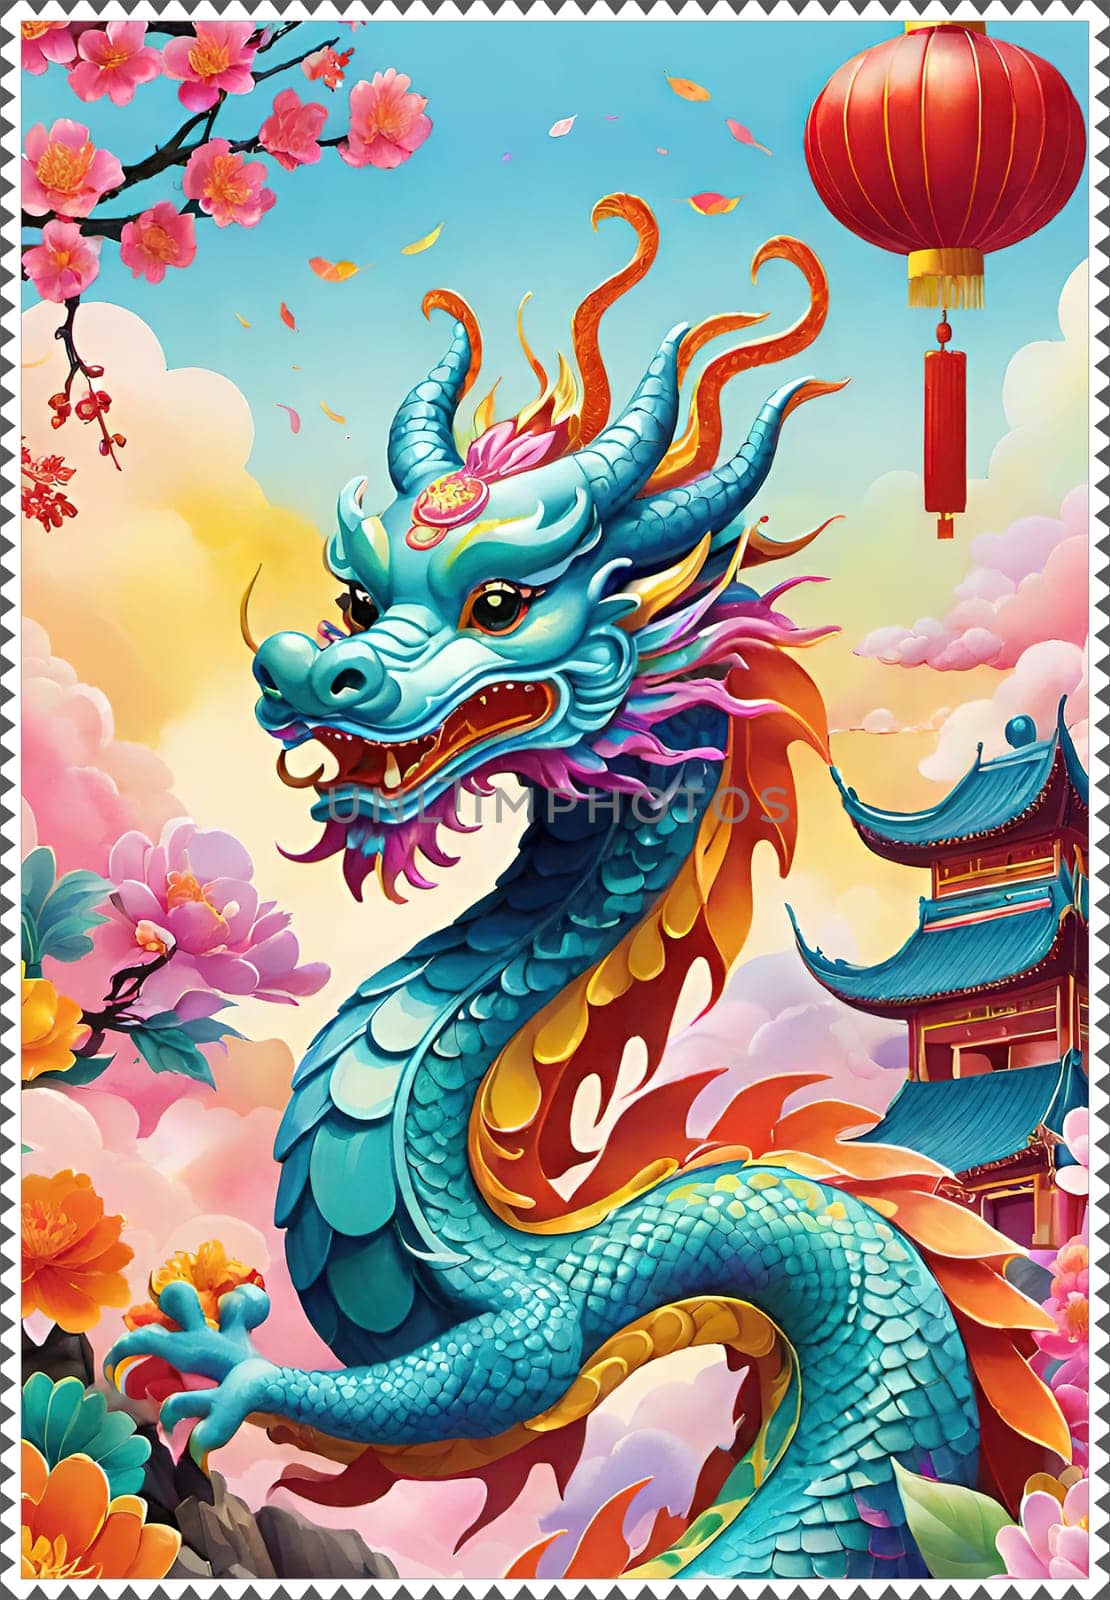 Chinese new year background by yilmazsavaskandag